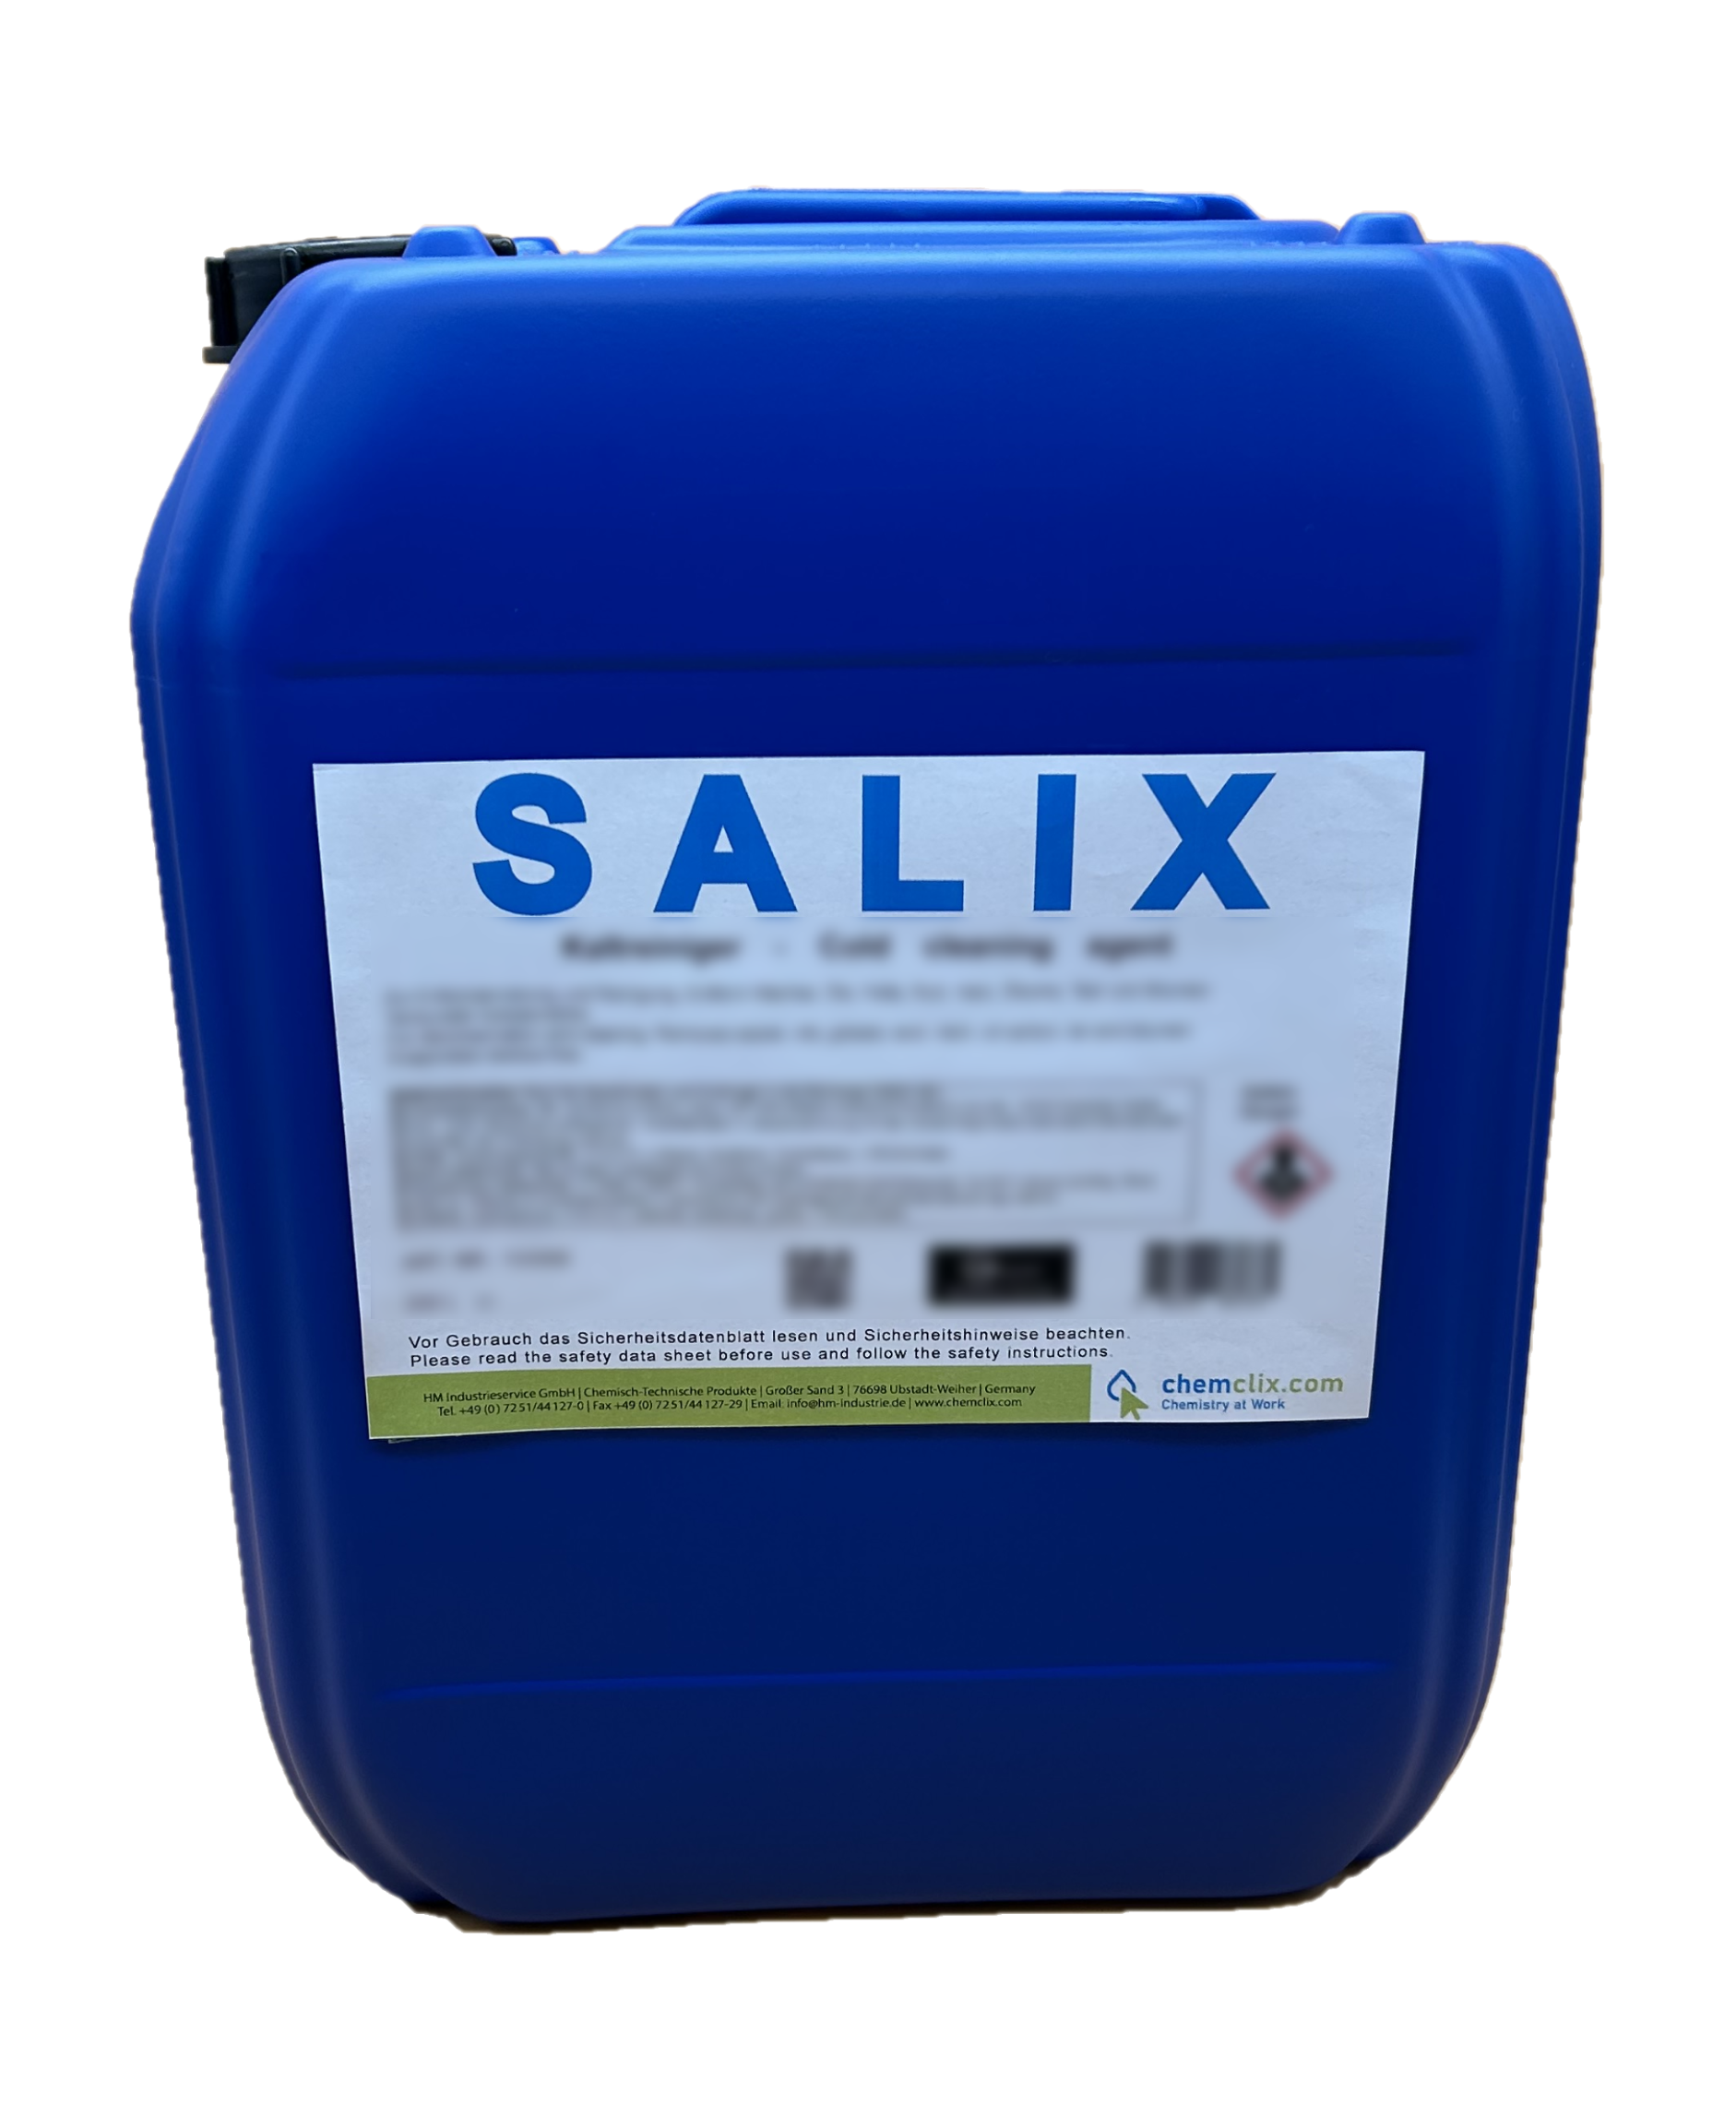 SALIX 80 Industrieentfetter